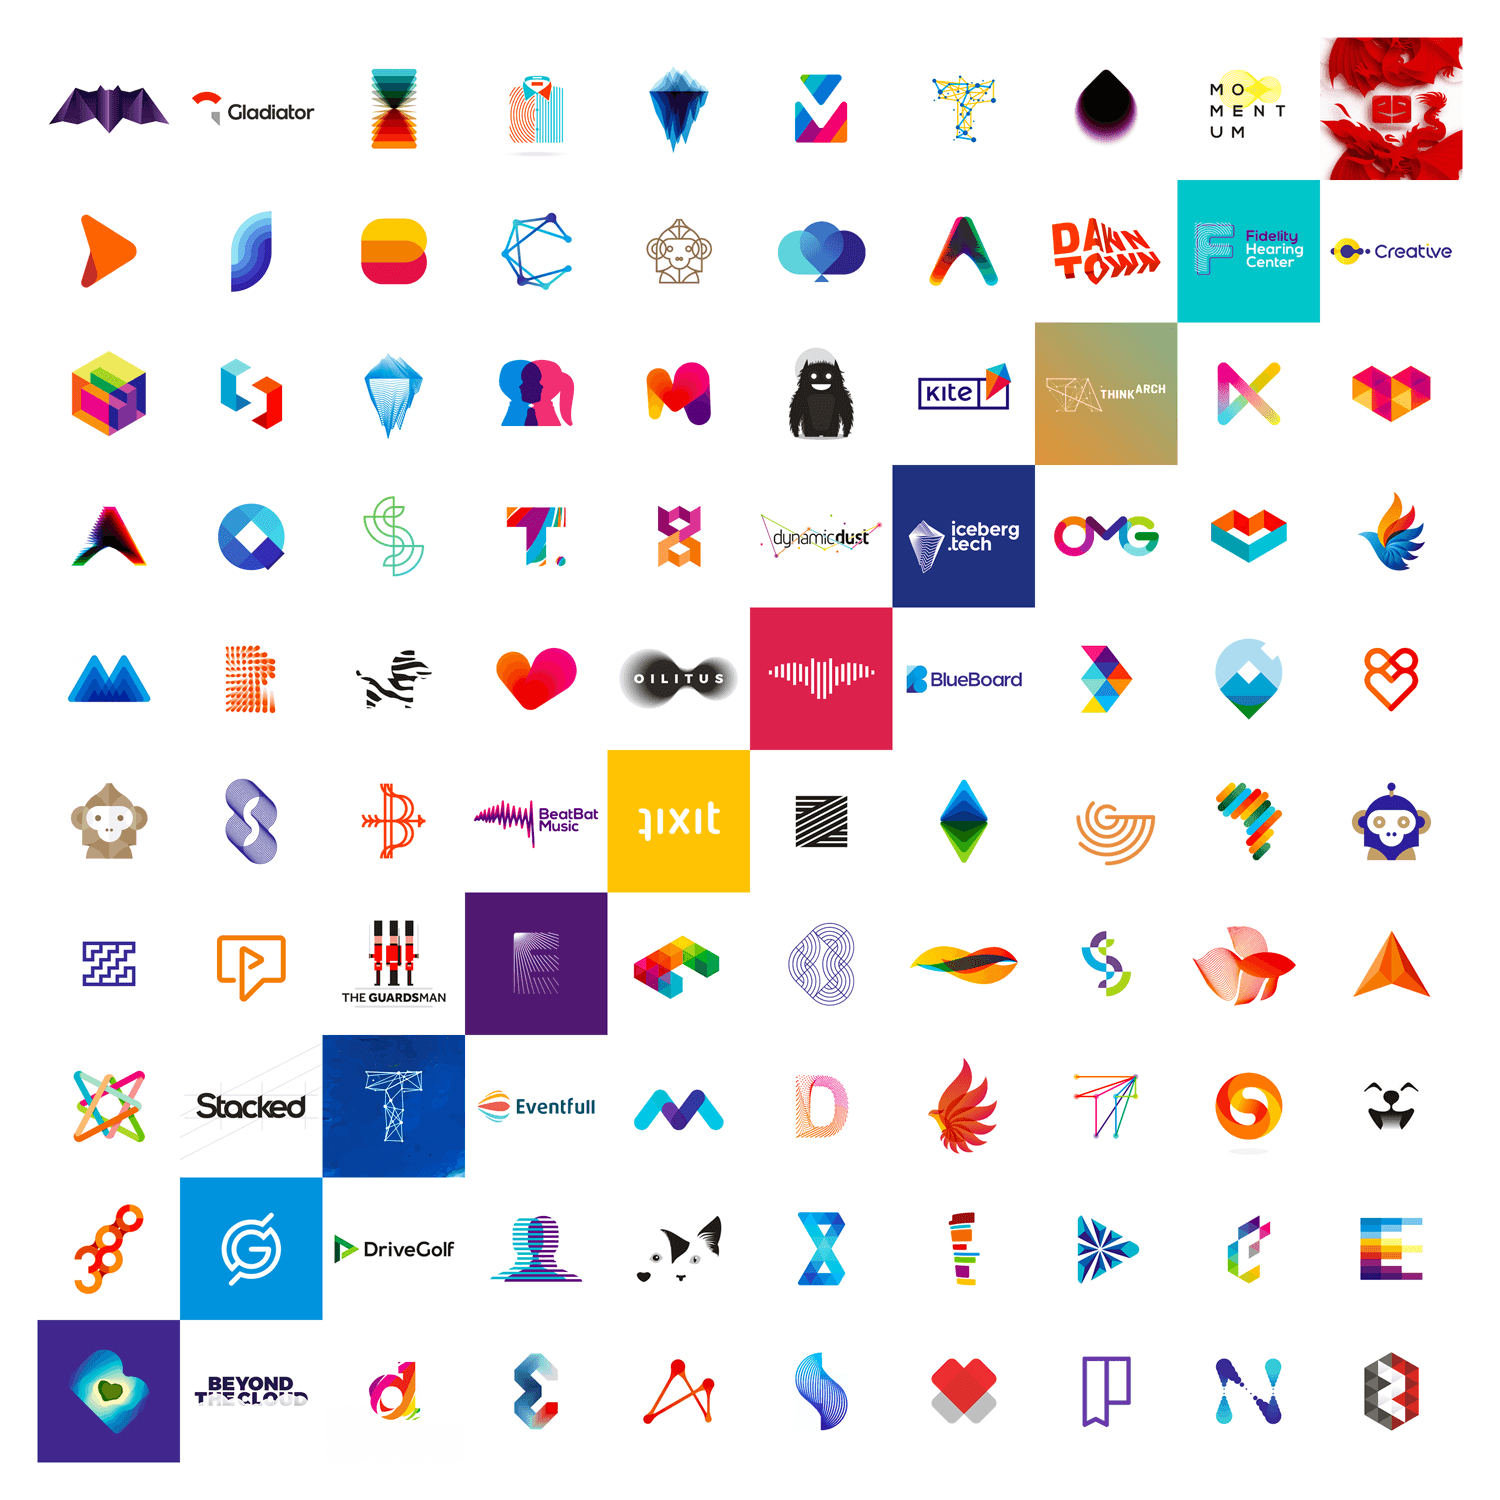 100 Pics Logo - Logo design by Alex Tass years, 100 logo design projects